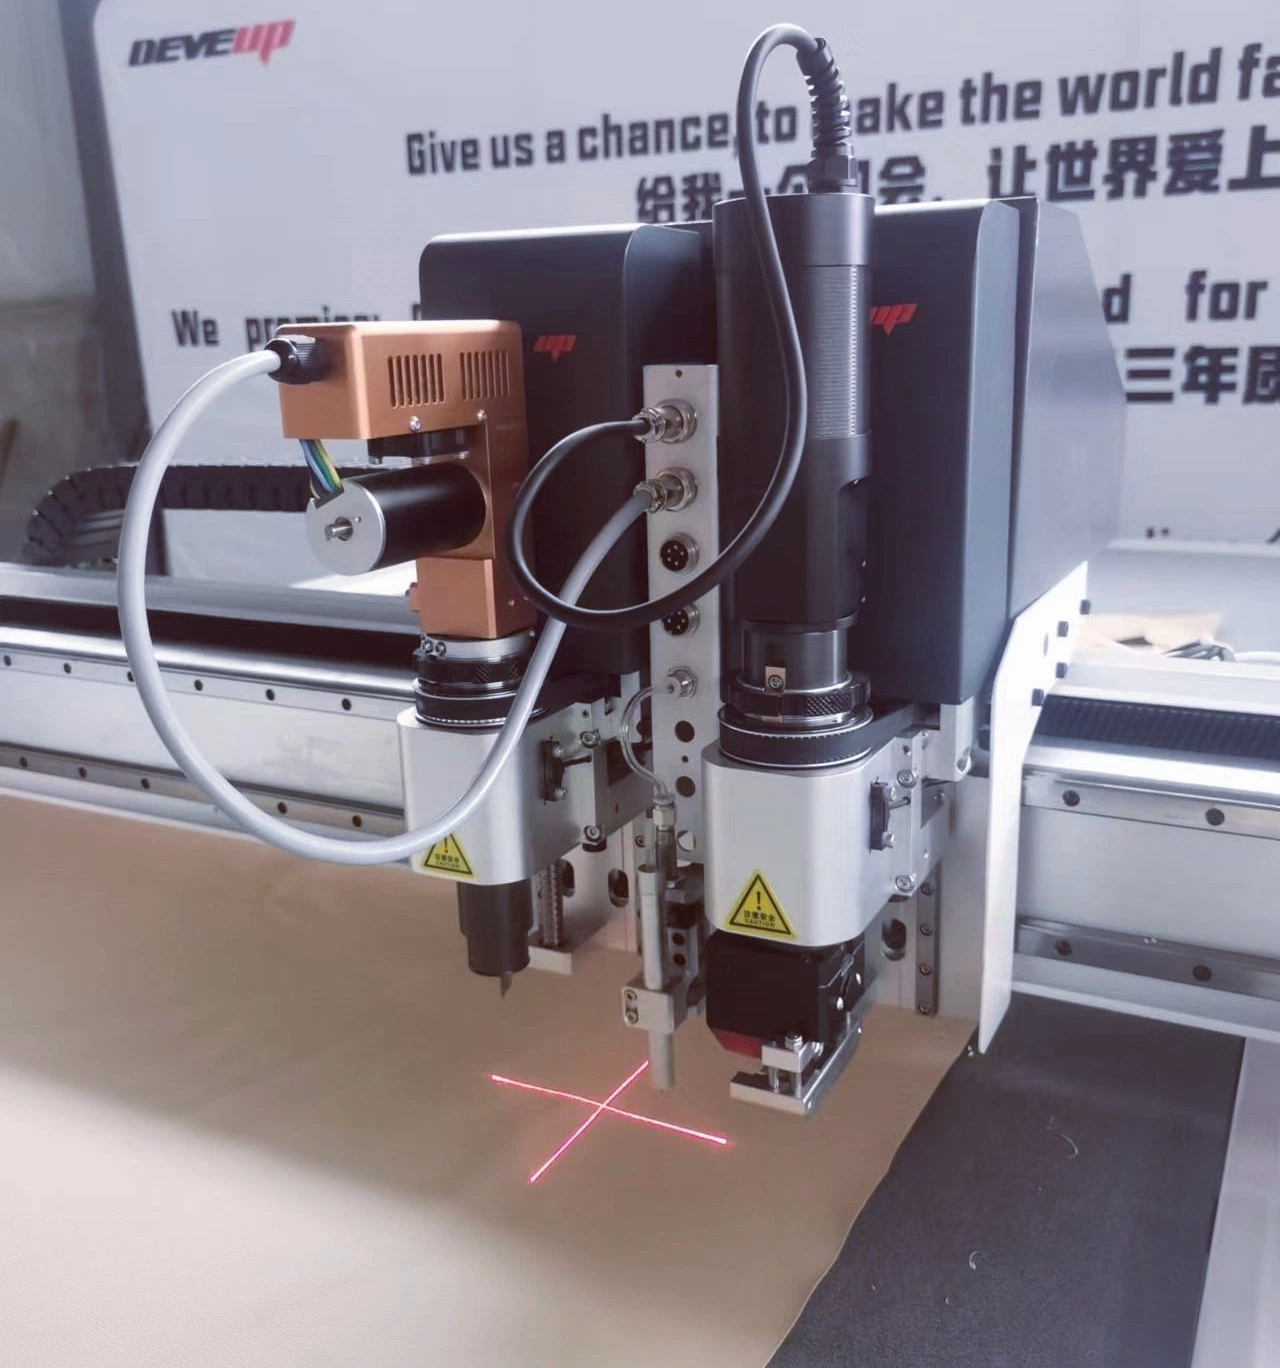 Máquina de corte láser CNC con cuchilla oscilante para tela de neopreno, fibra de carbono, fibra de vidrio, tela de prepreg, cuero, calzado y textil.